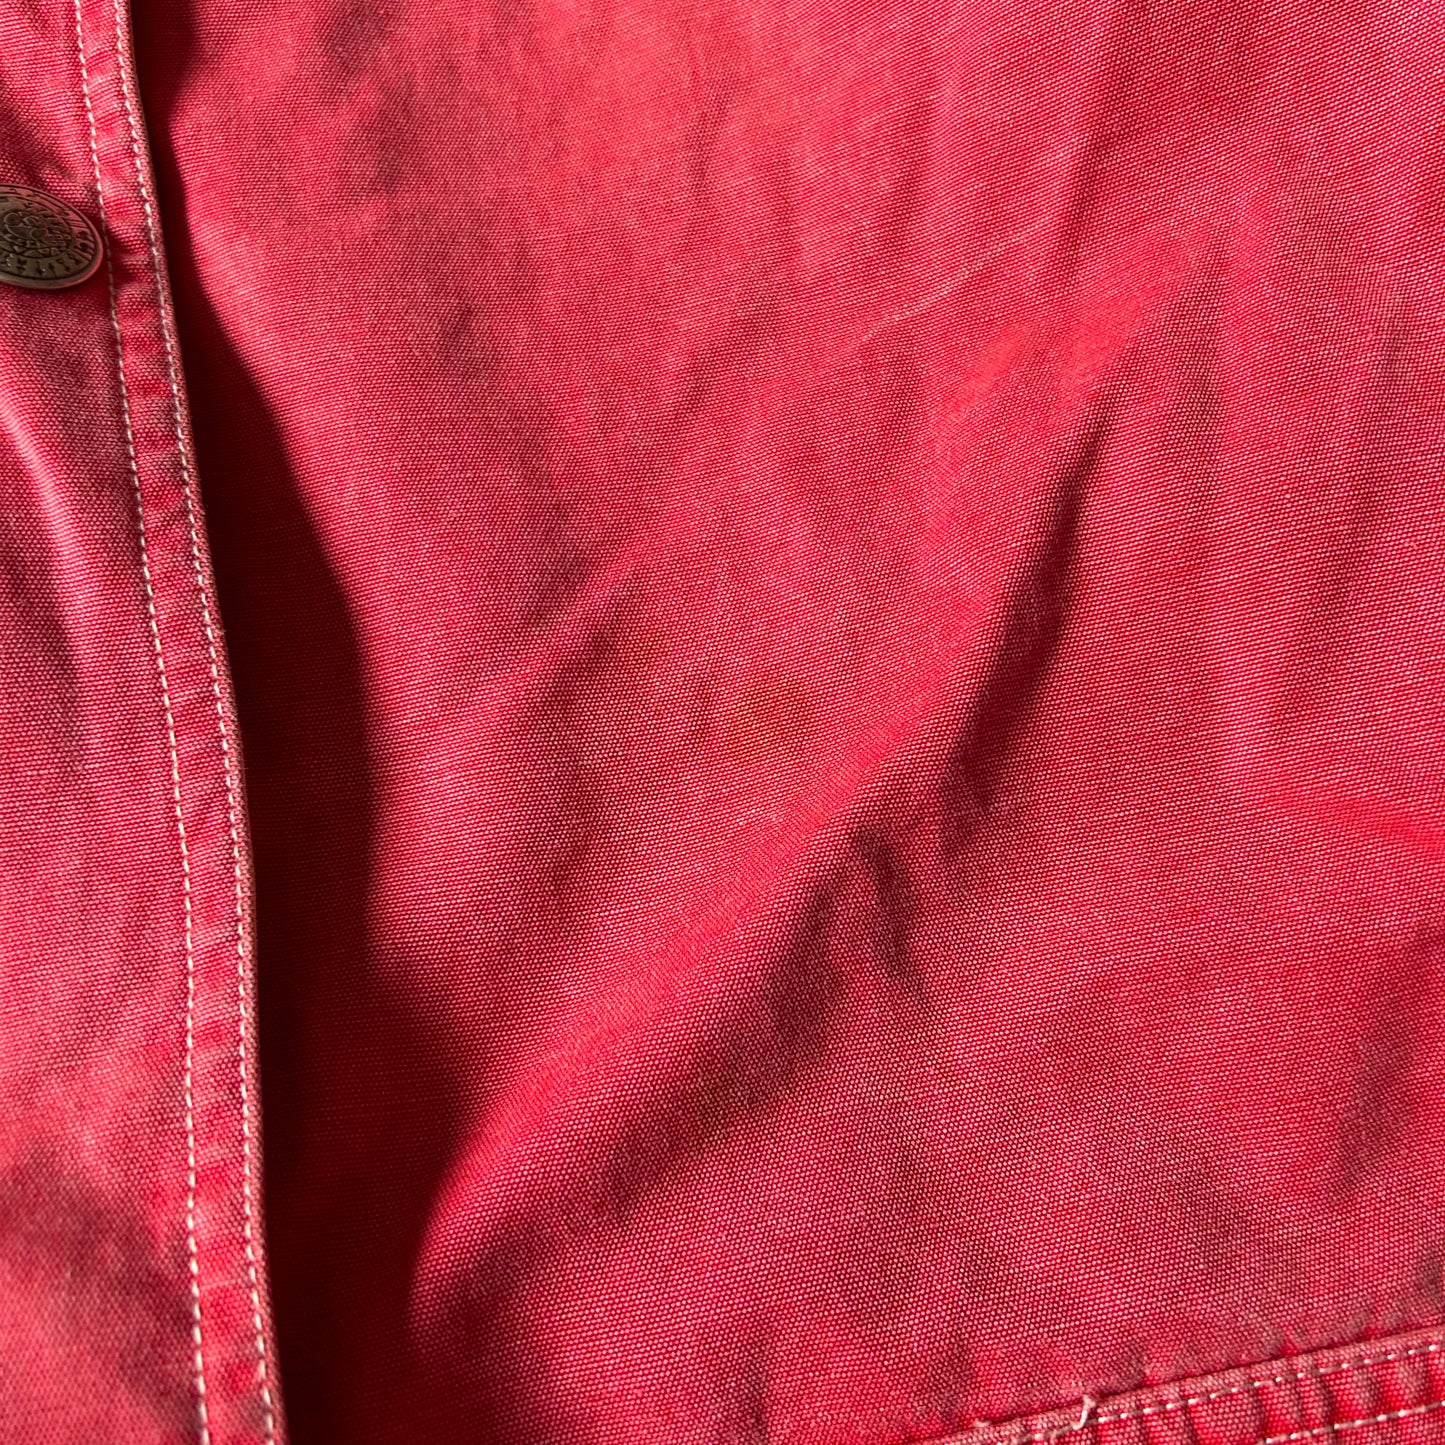 1980s - vintage utex canvas jacket